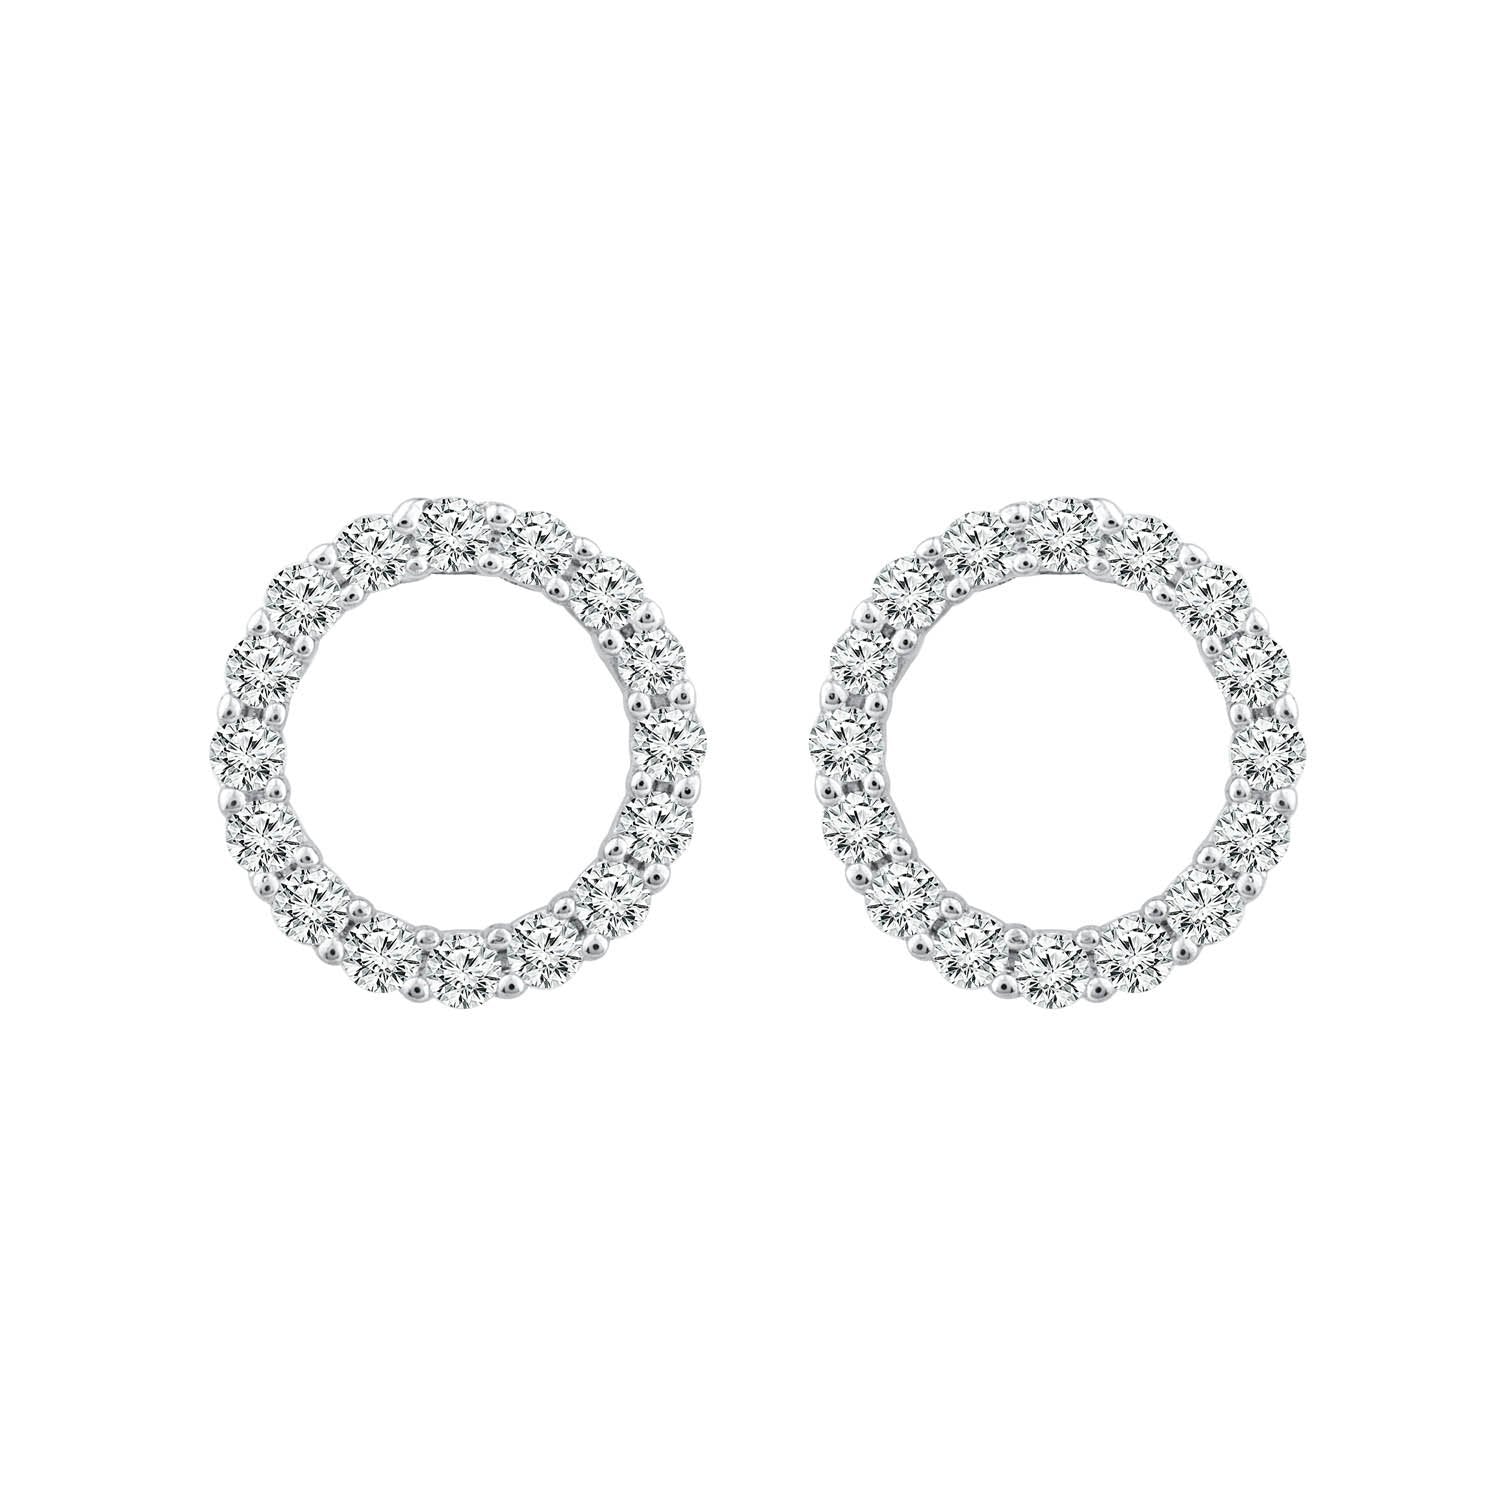 9ct White Gold Diamond Fashion Earrings